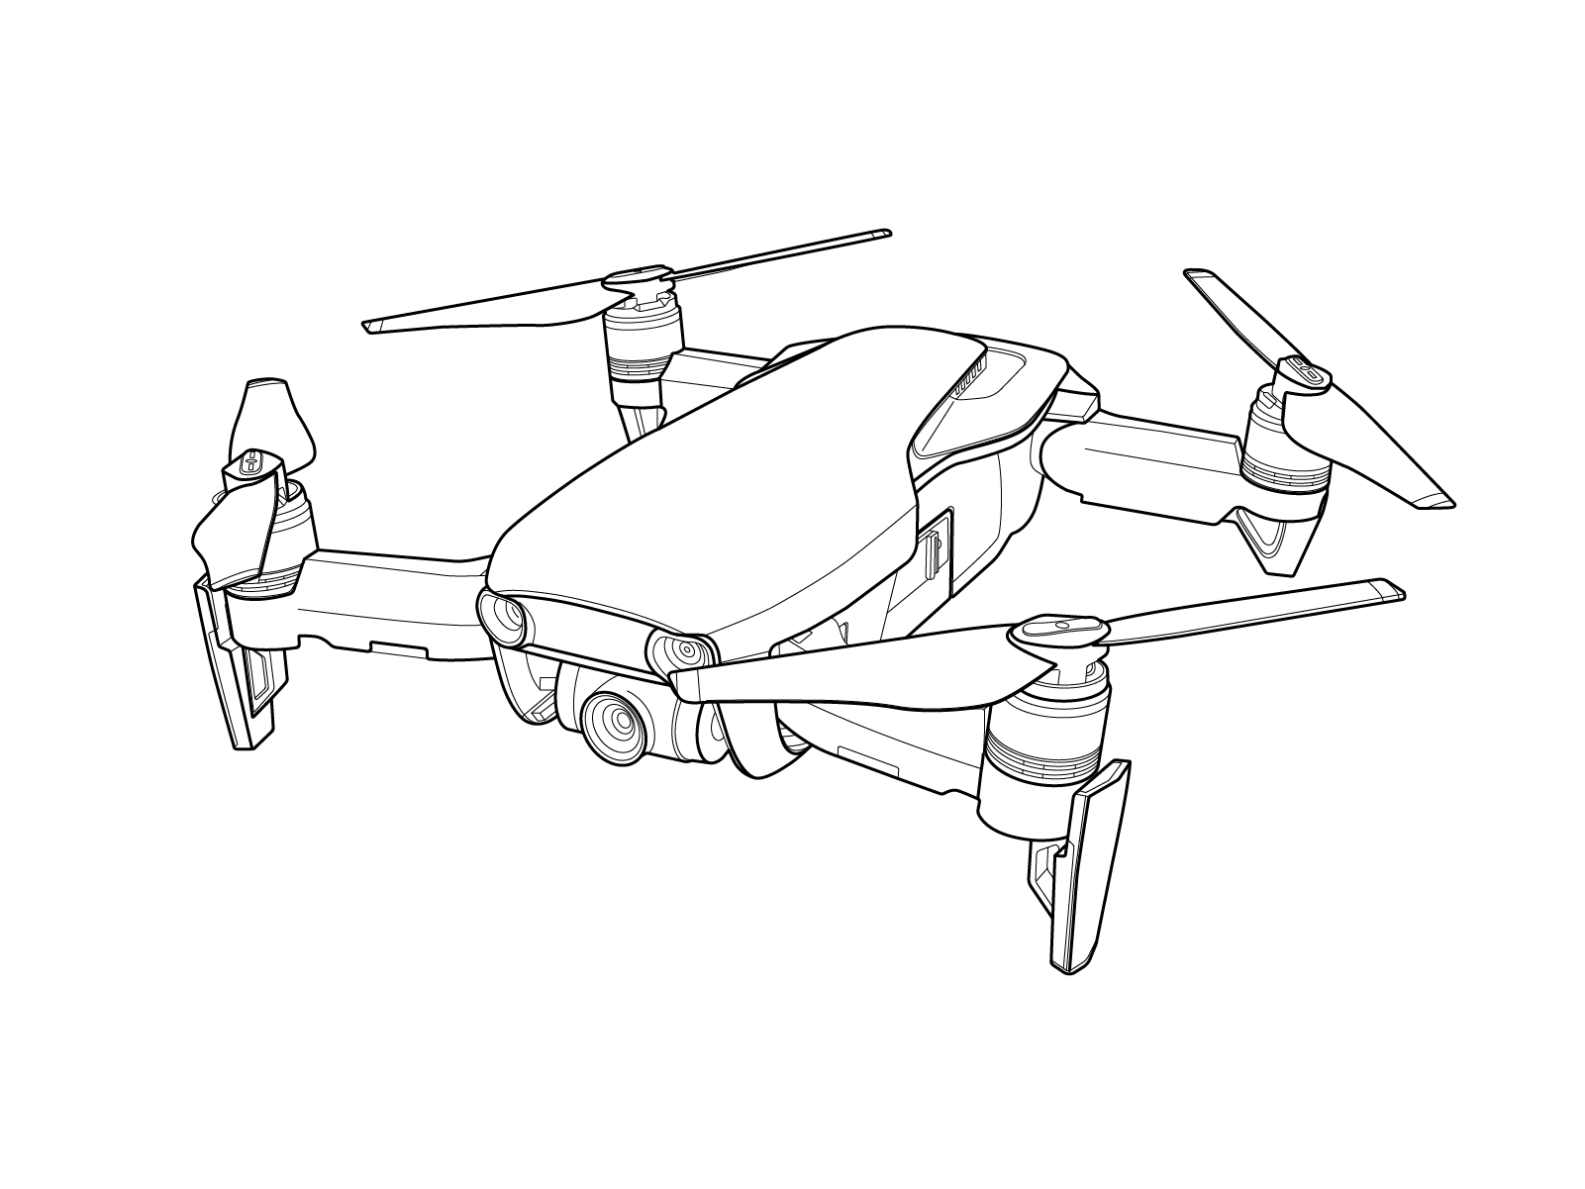 Isolated Sketch Of A Drone Toy Vector Illustrtion Design Royalty Free Svg  Clip Artok Vektorokt és Stock Illusztrációk Image 100748310